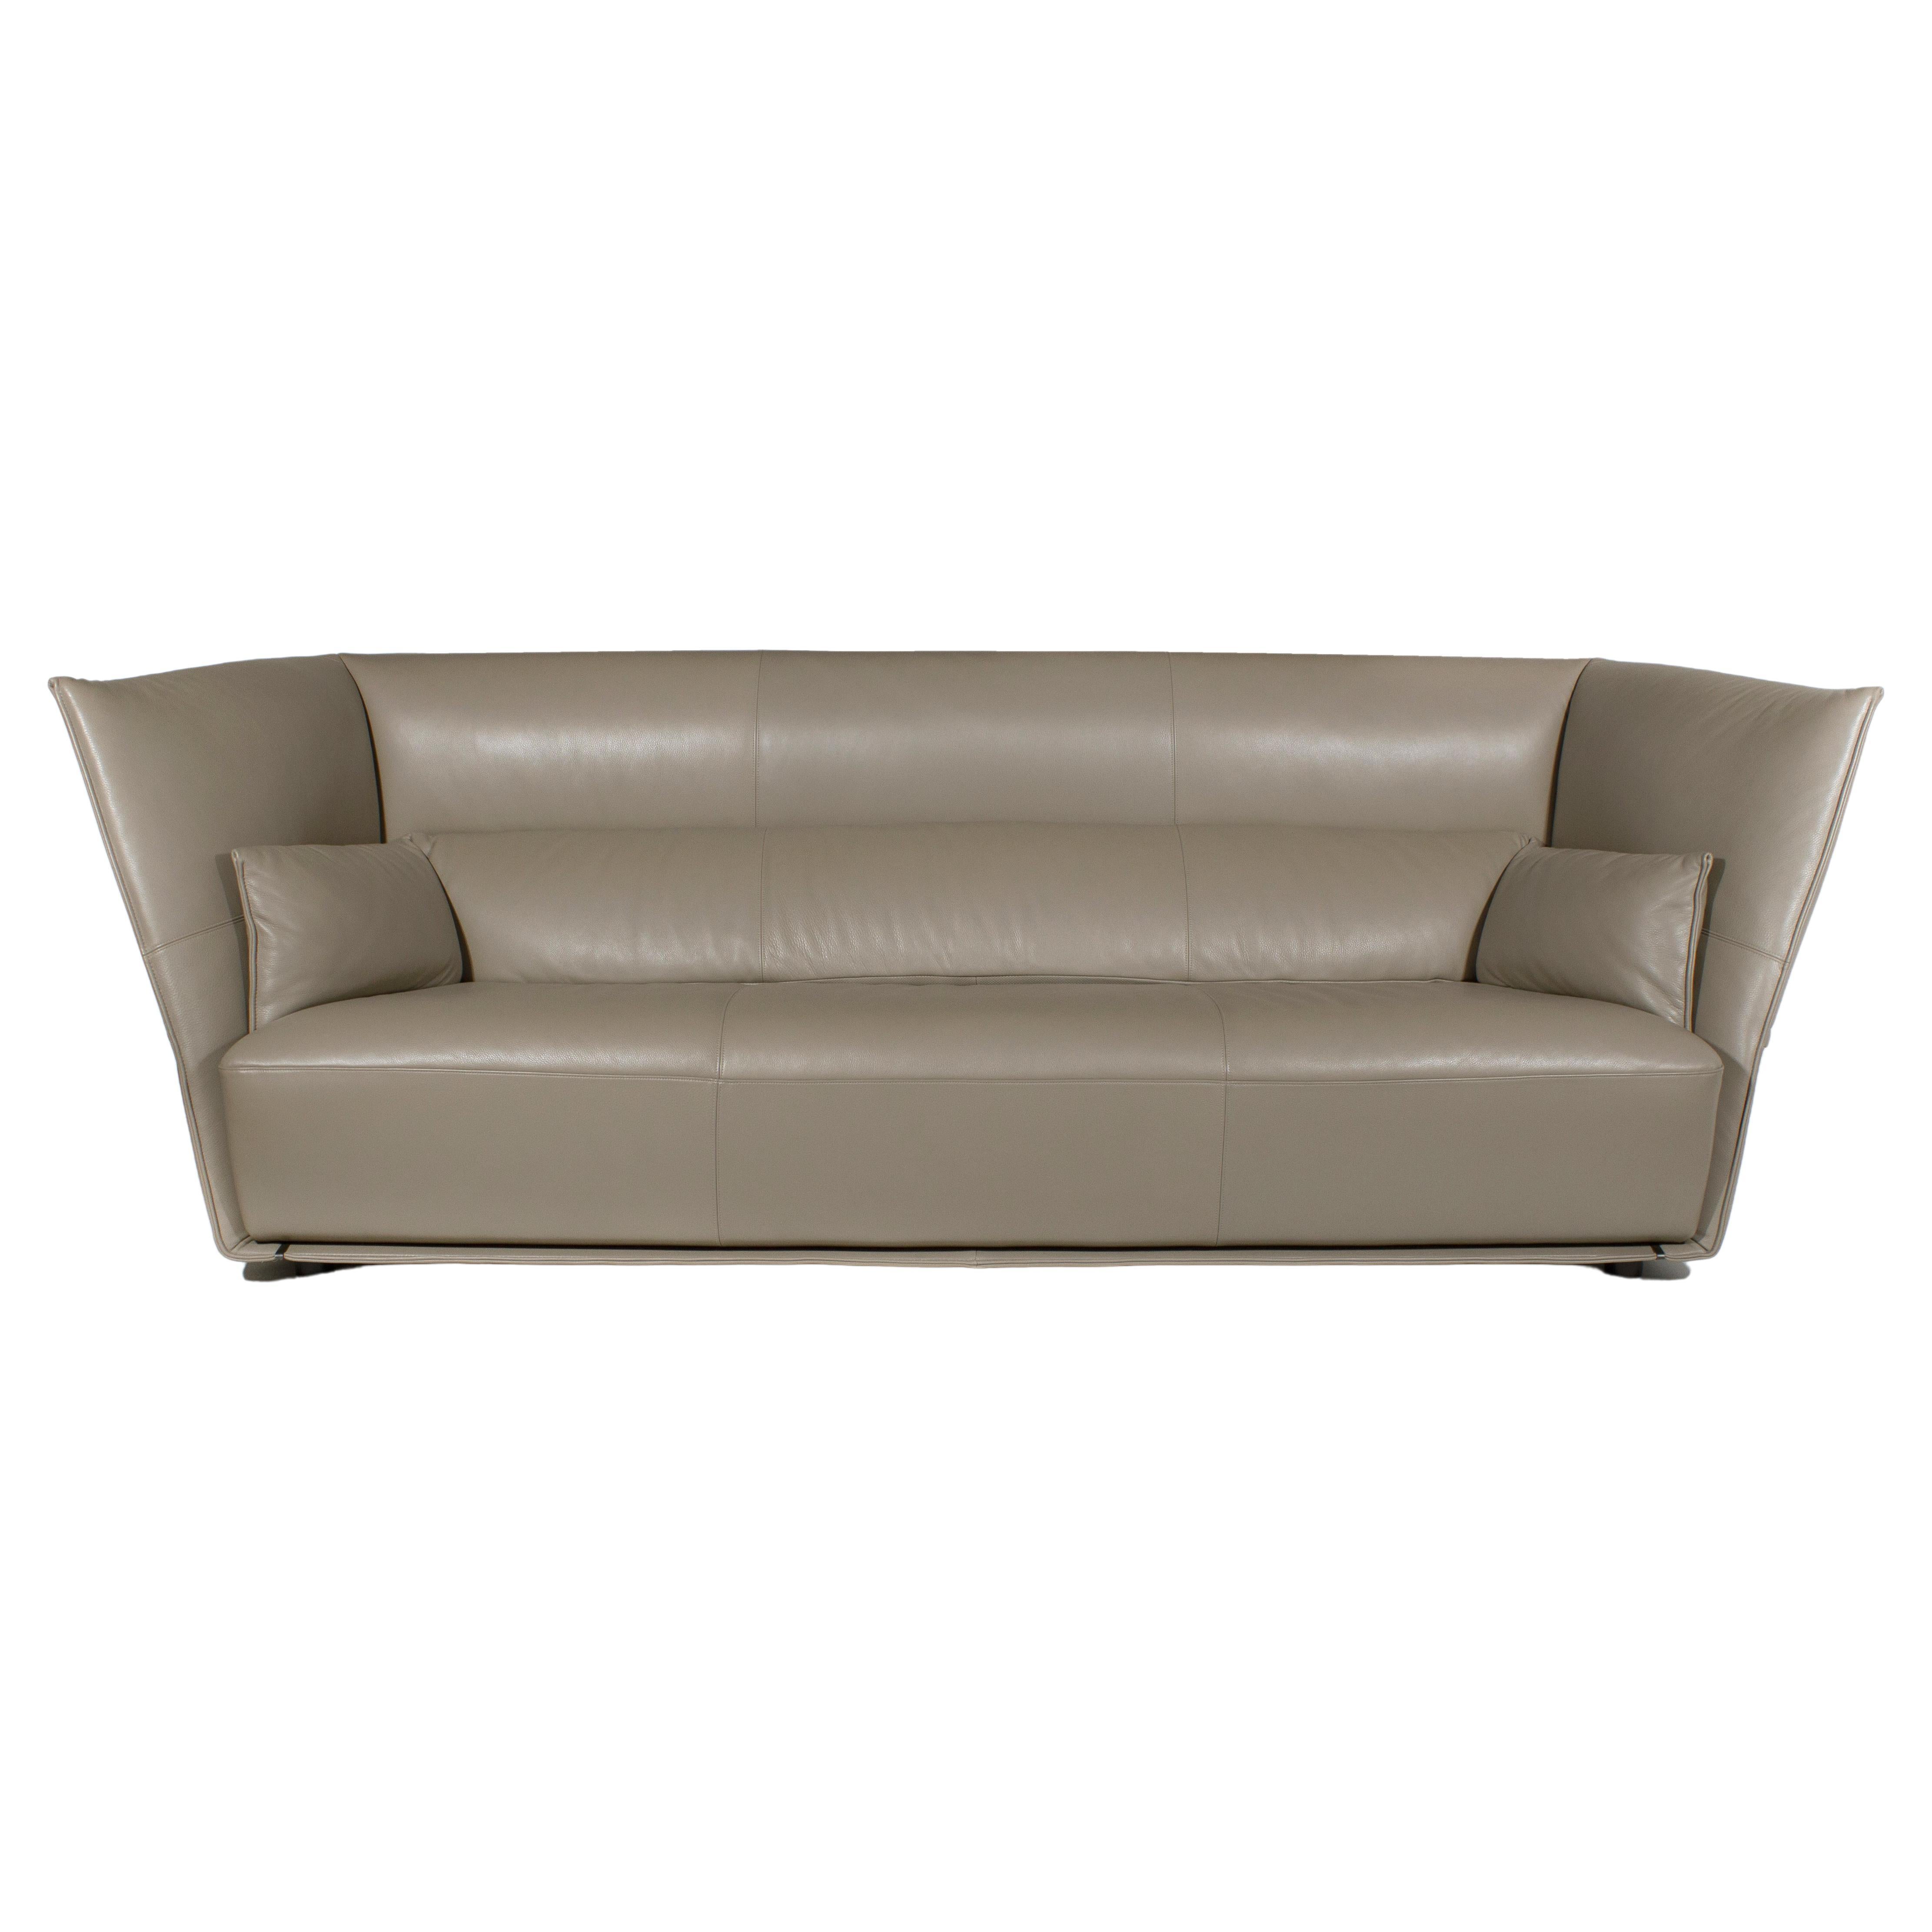 Paltrona Frau 'Almo' Modern Leather Sofa Designed by Garcia Cumini For Sale